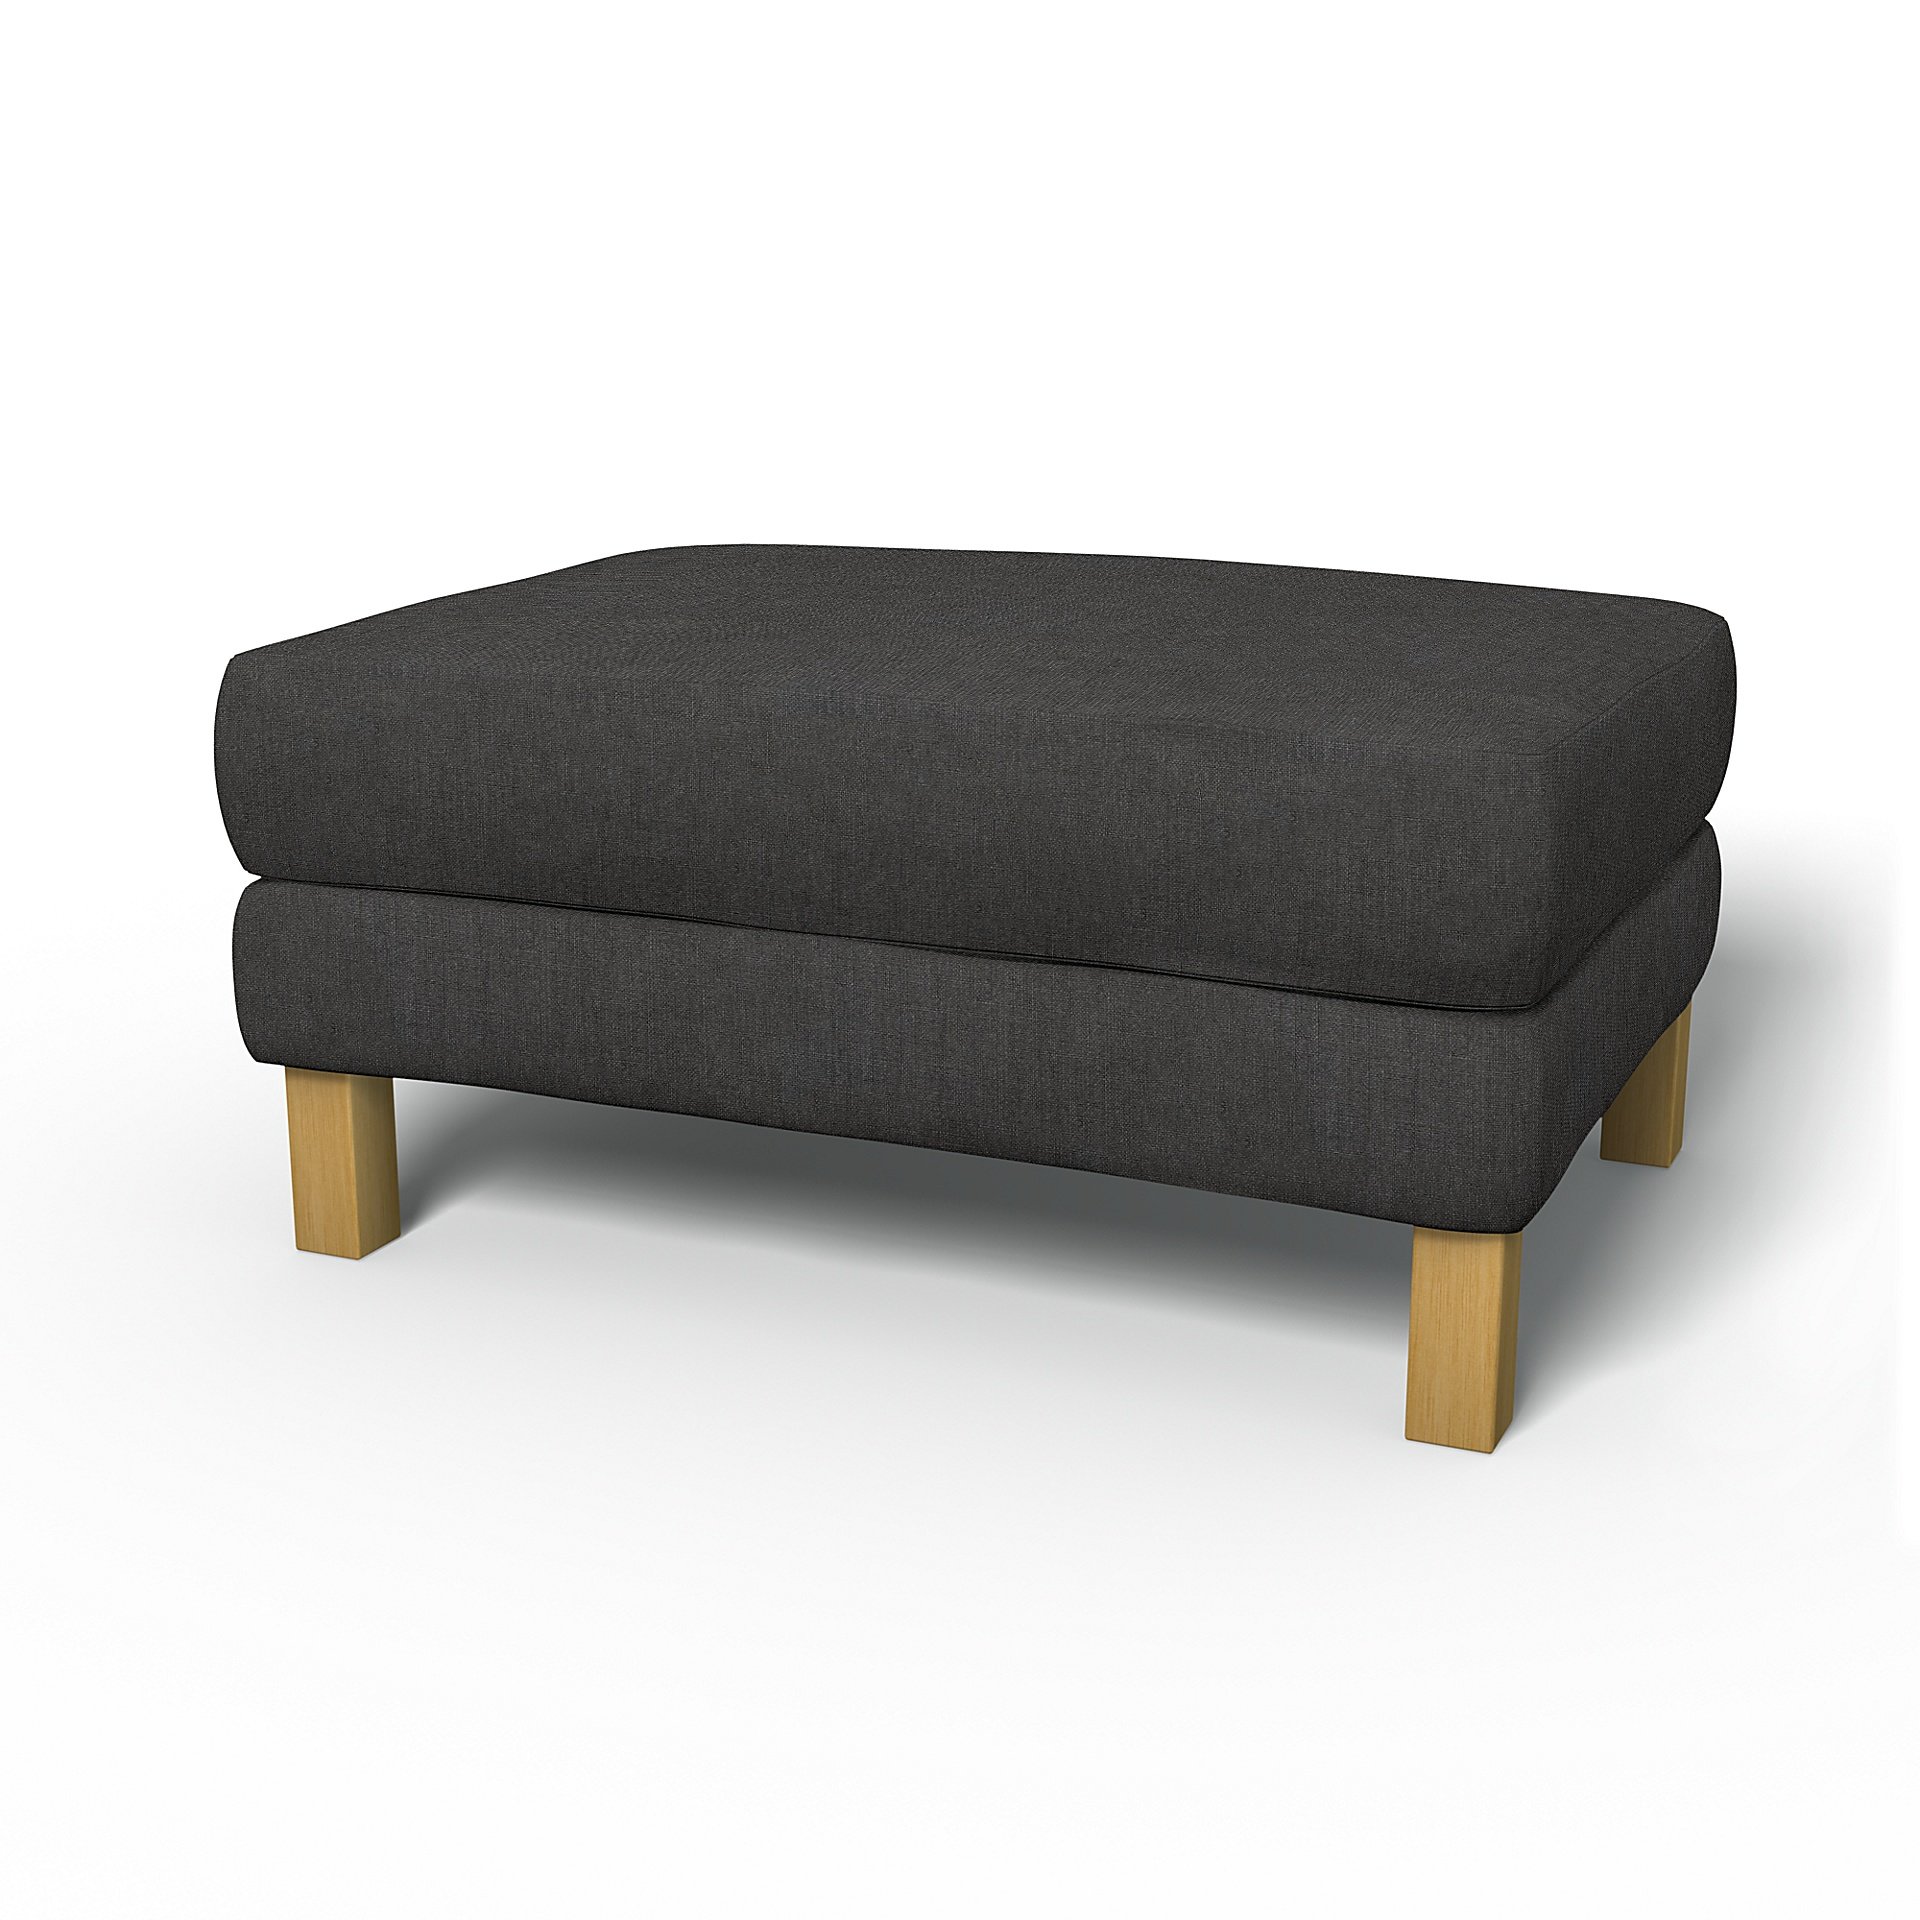 IKEA - Karlstad Footstool Cover, Espresso, Linen - Bemz